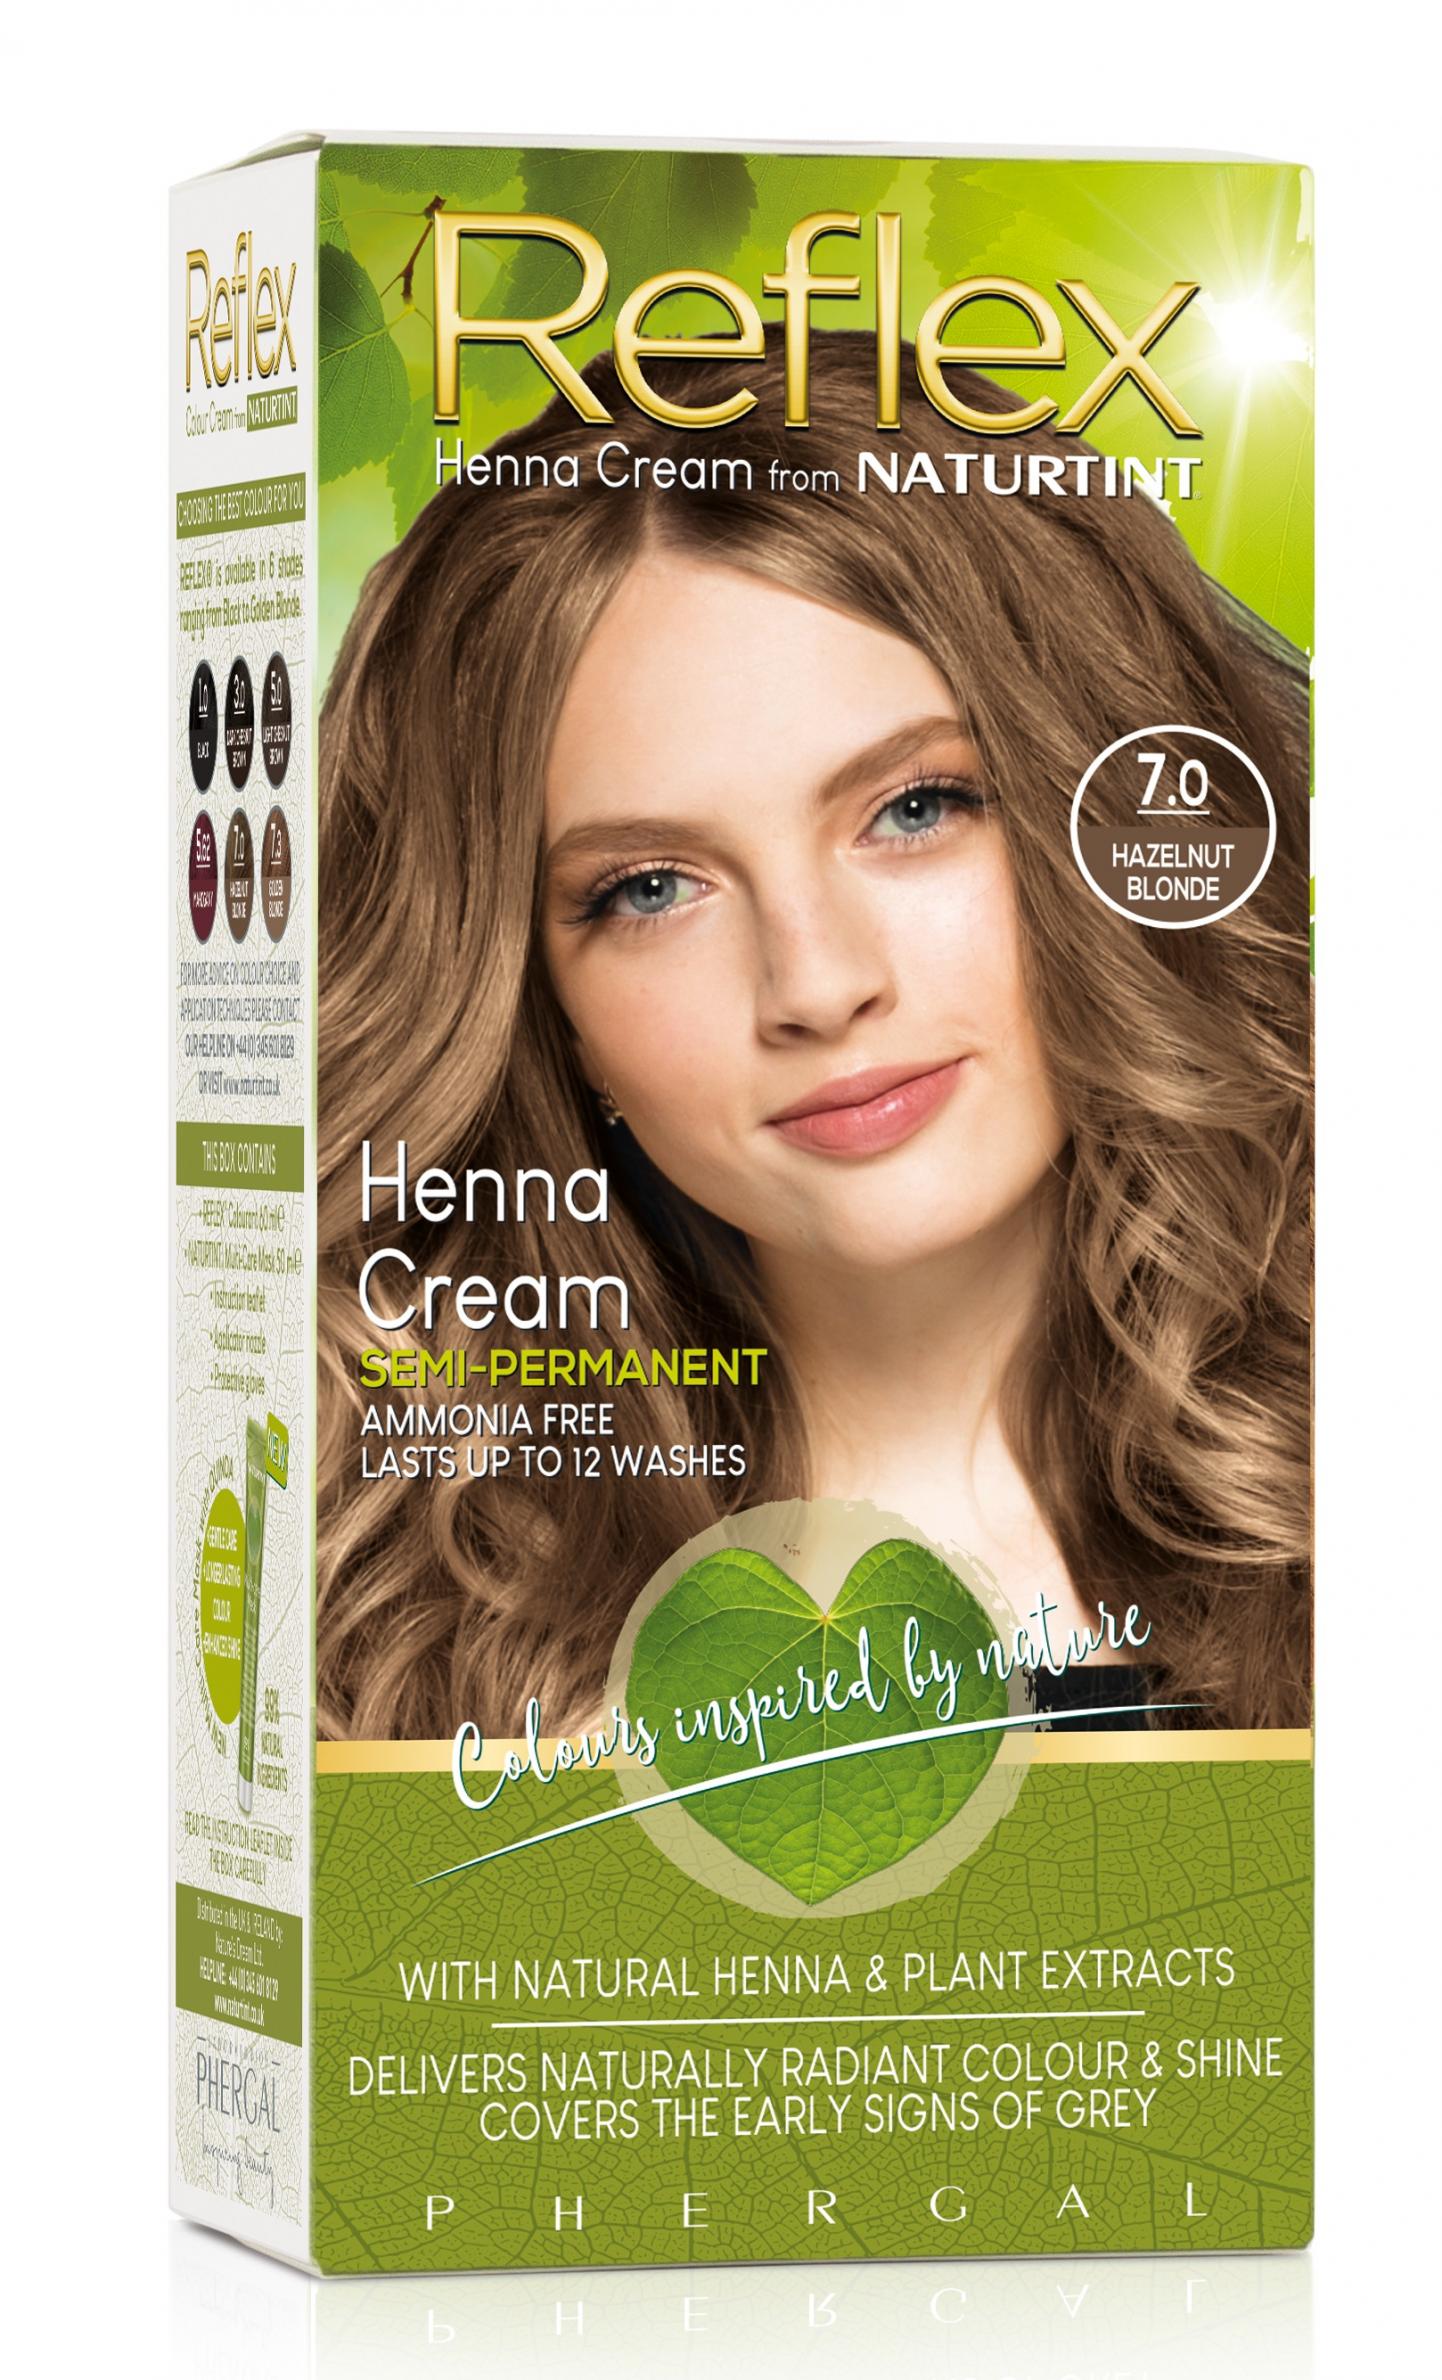 Naturtint Reflex Henna Cream Semi-Permanent 7.0 Hazelnut Blonde